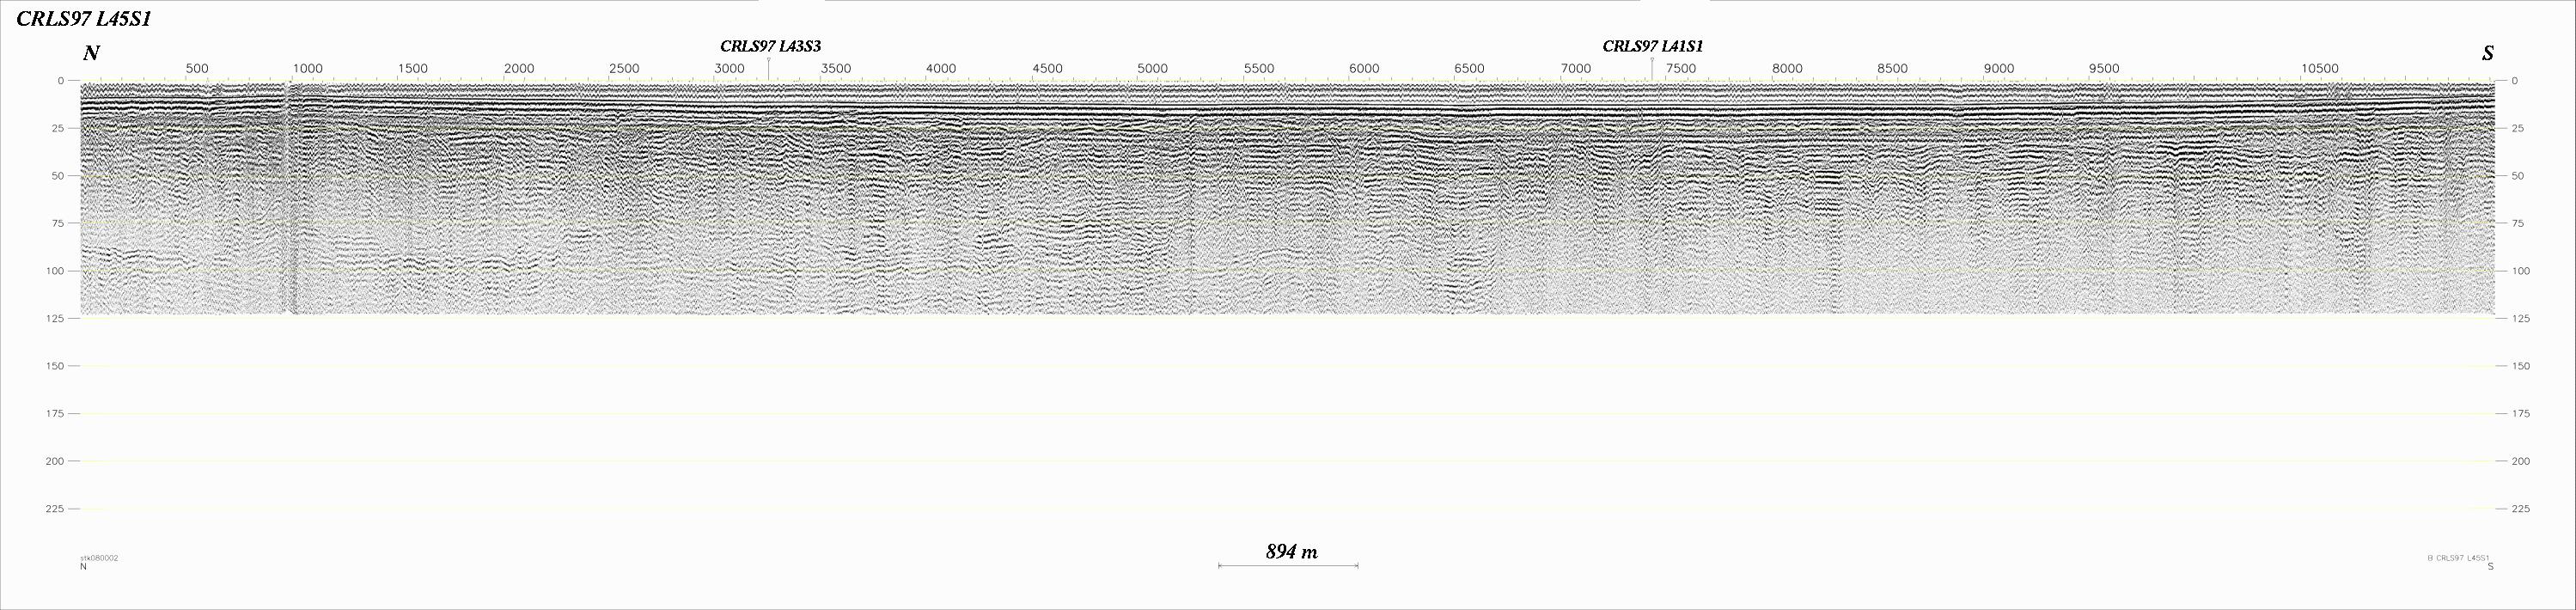 Seismic Reflection Profile Line No.: L45s1 (399865 bytes)